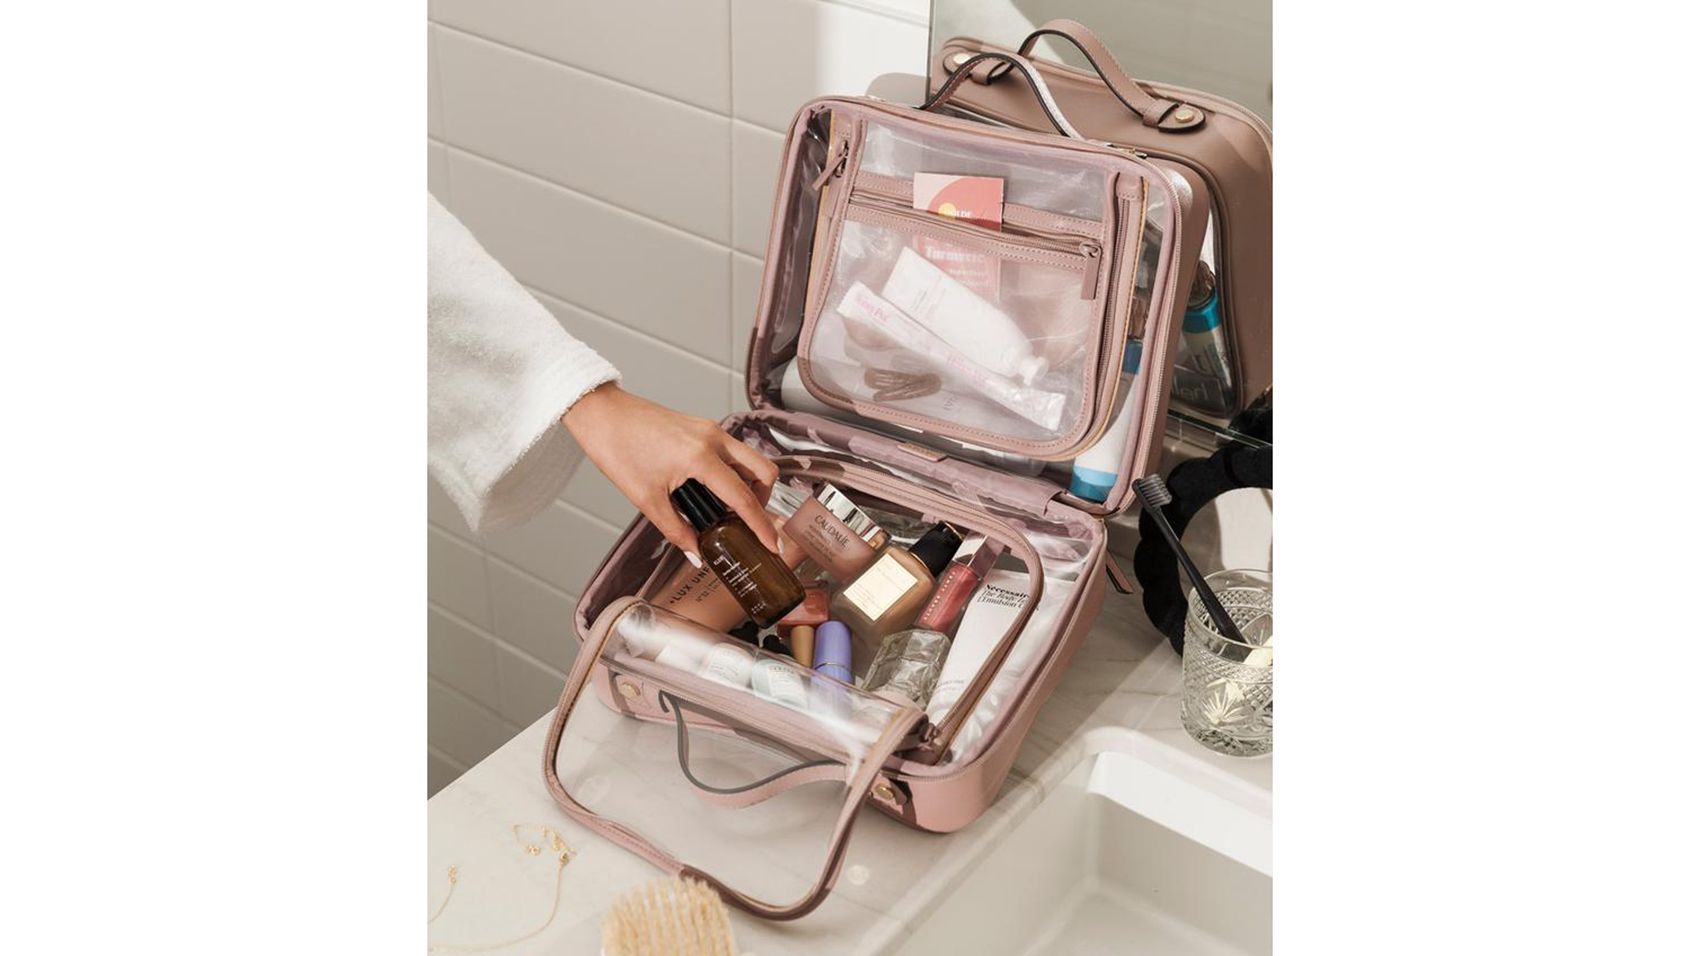 Men and Women Makeup Bag Organizer Travel Toiletry Kit Cosmetic